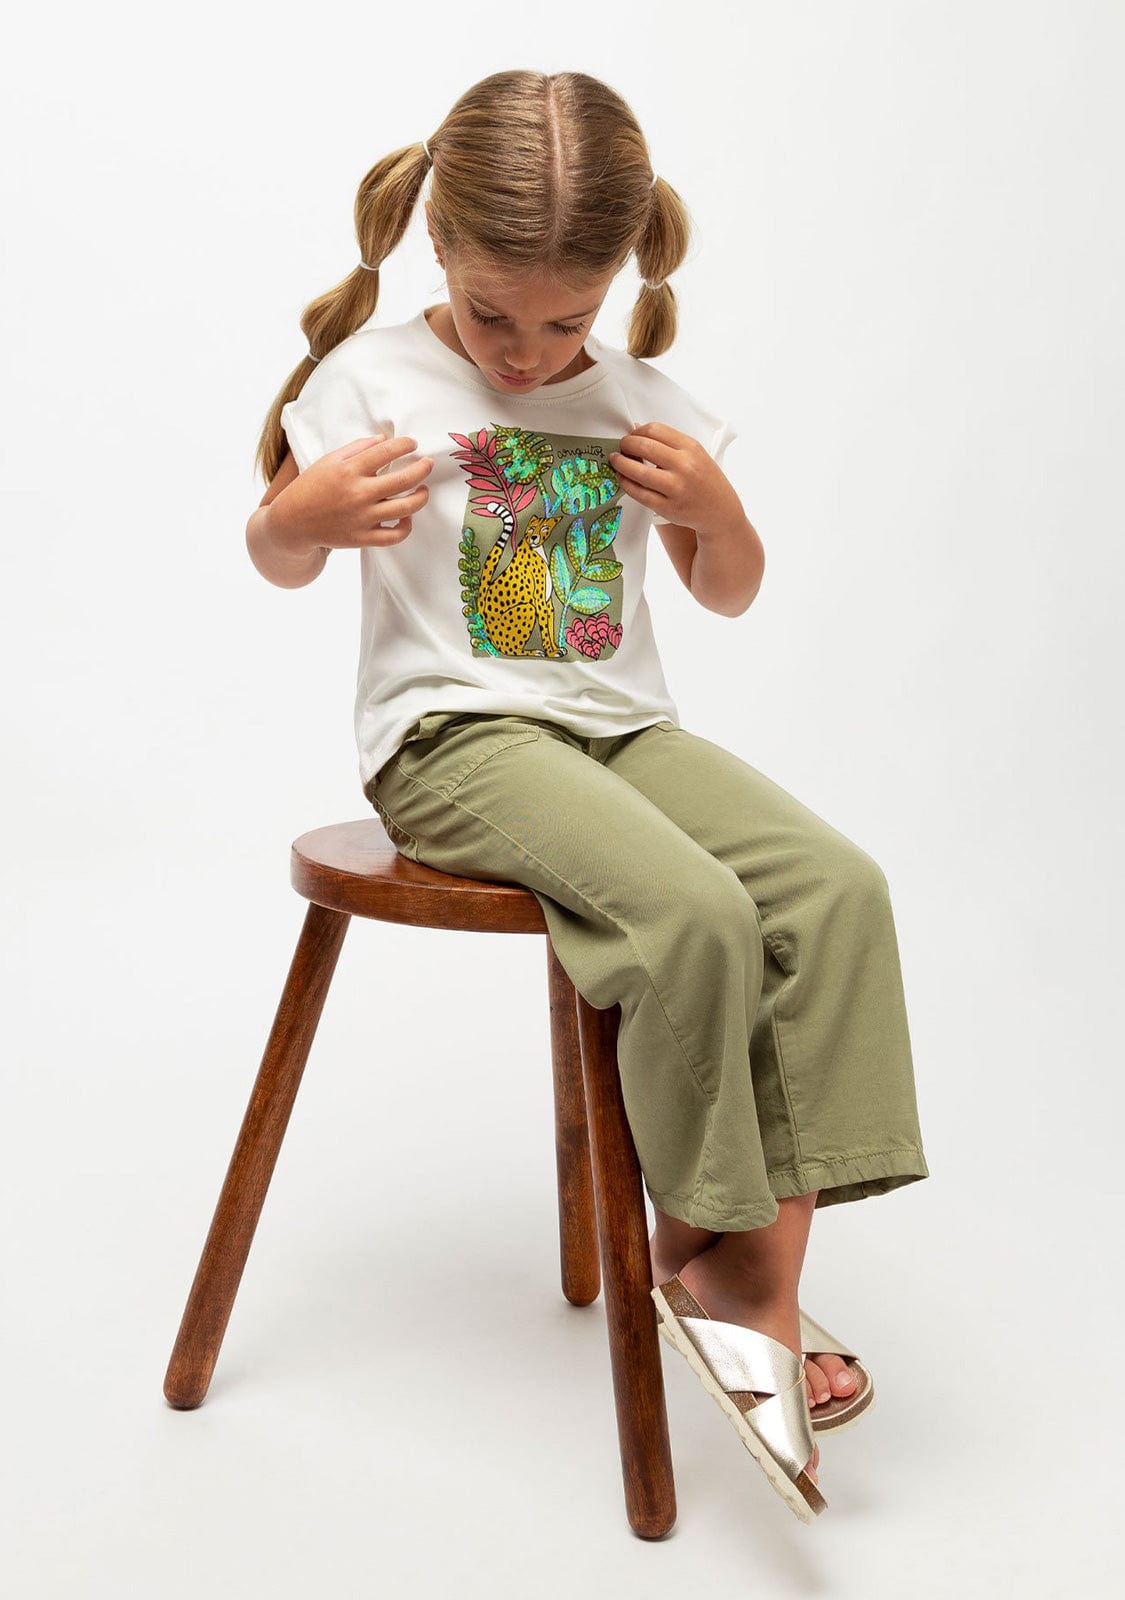 CONGUITOS TEXTIL Clothing Girl's "Jungle" Sequins T-Shirt